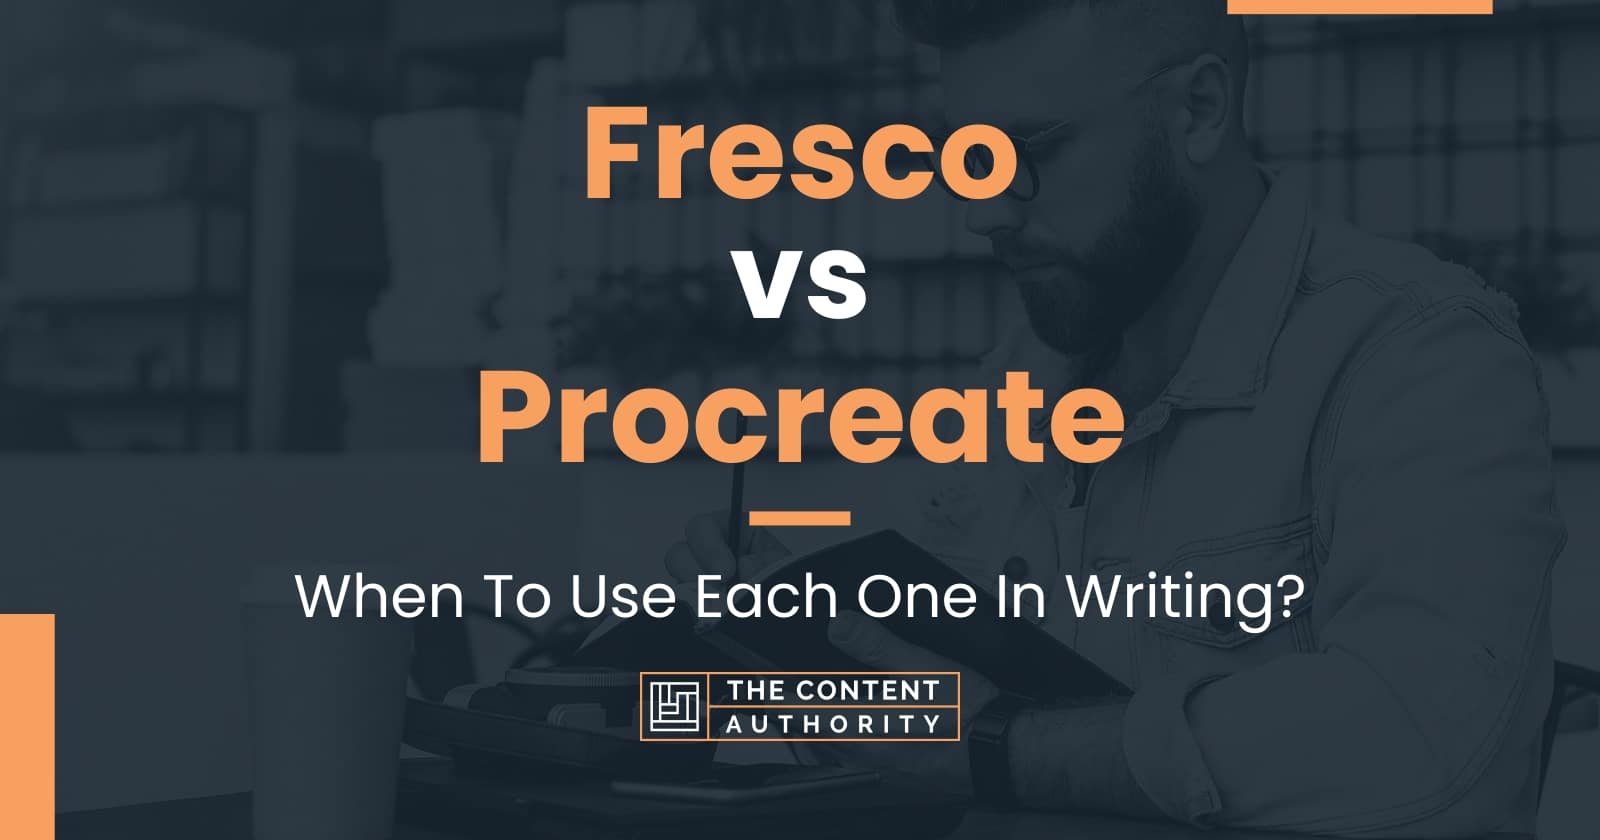 Adobe Fresco vs Procreate: Why I Switched to Fresco! - YouTube